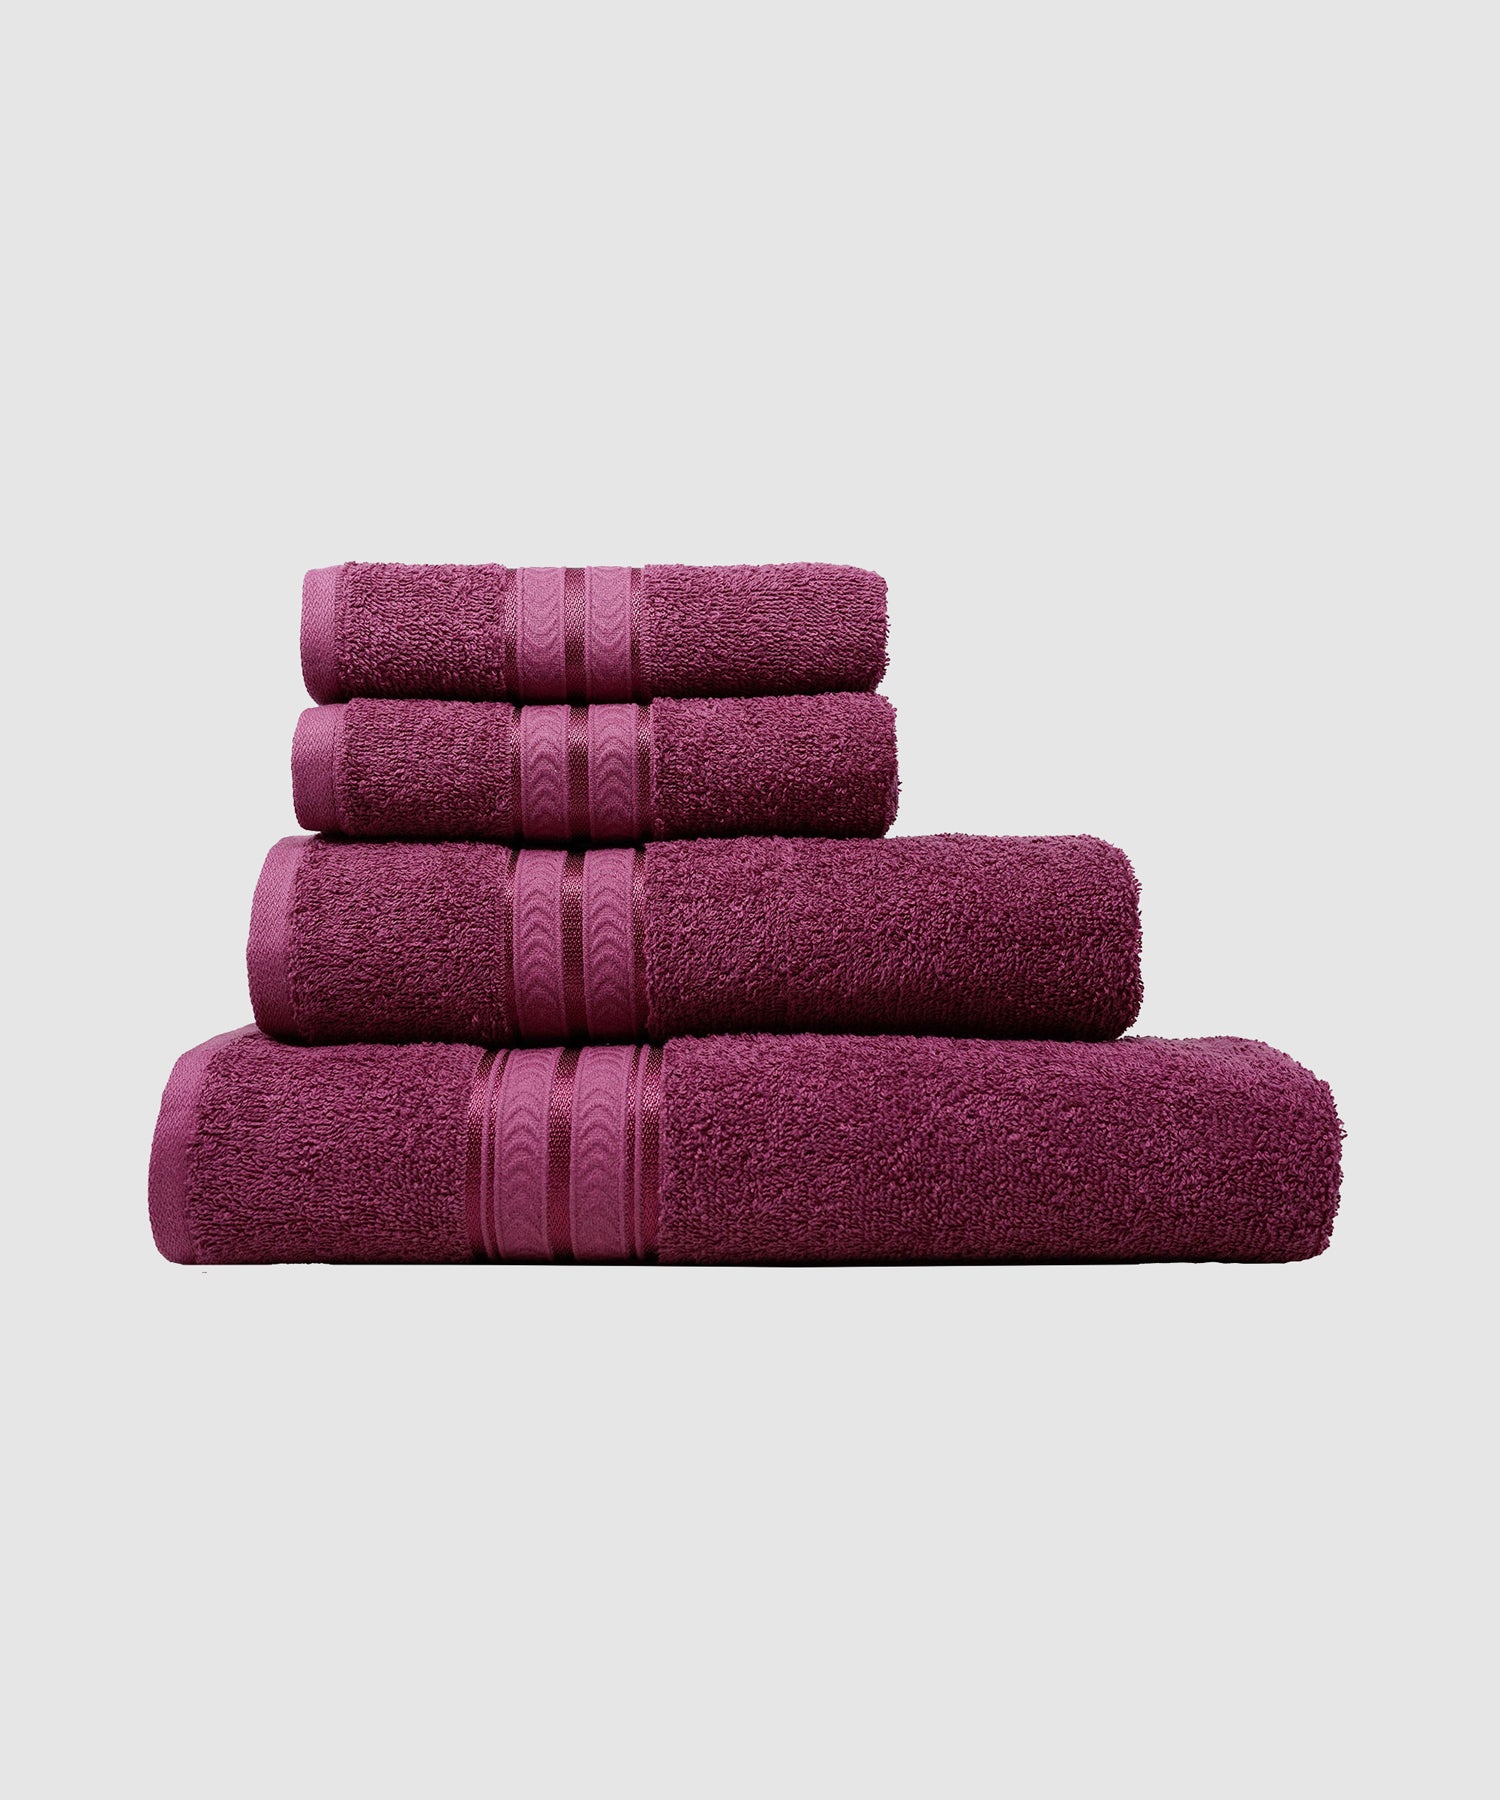 Celebration 4 PC Set 1 Bath Towel of 75 cm x 150 cm, 1 Small Bath Towel of 57 cm x 120 cm, 2 Hand Towels of 40 cm x 60 cm  RED WINE